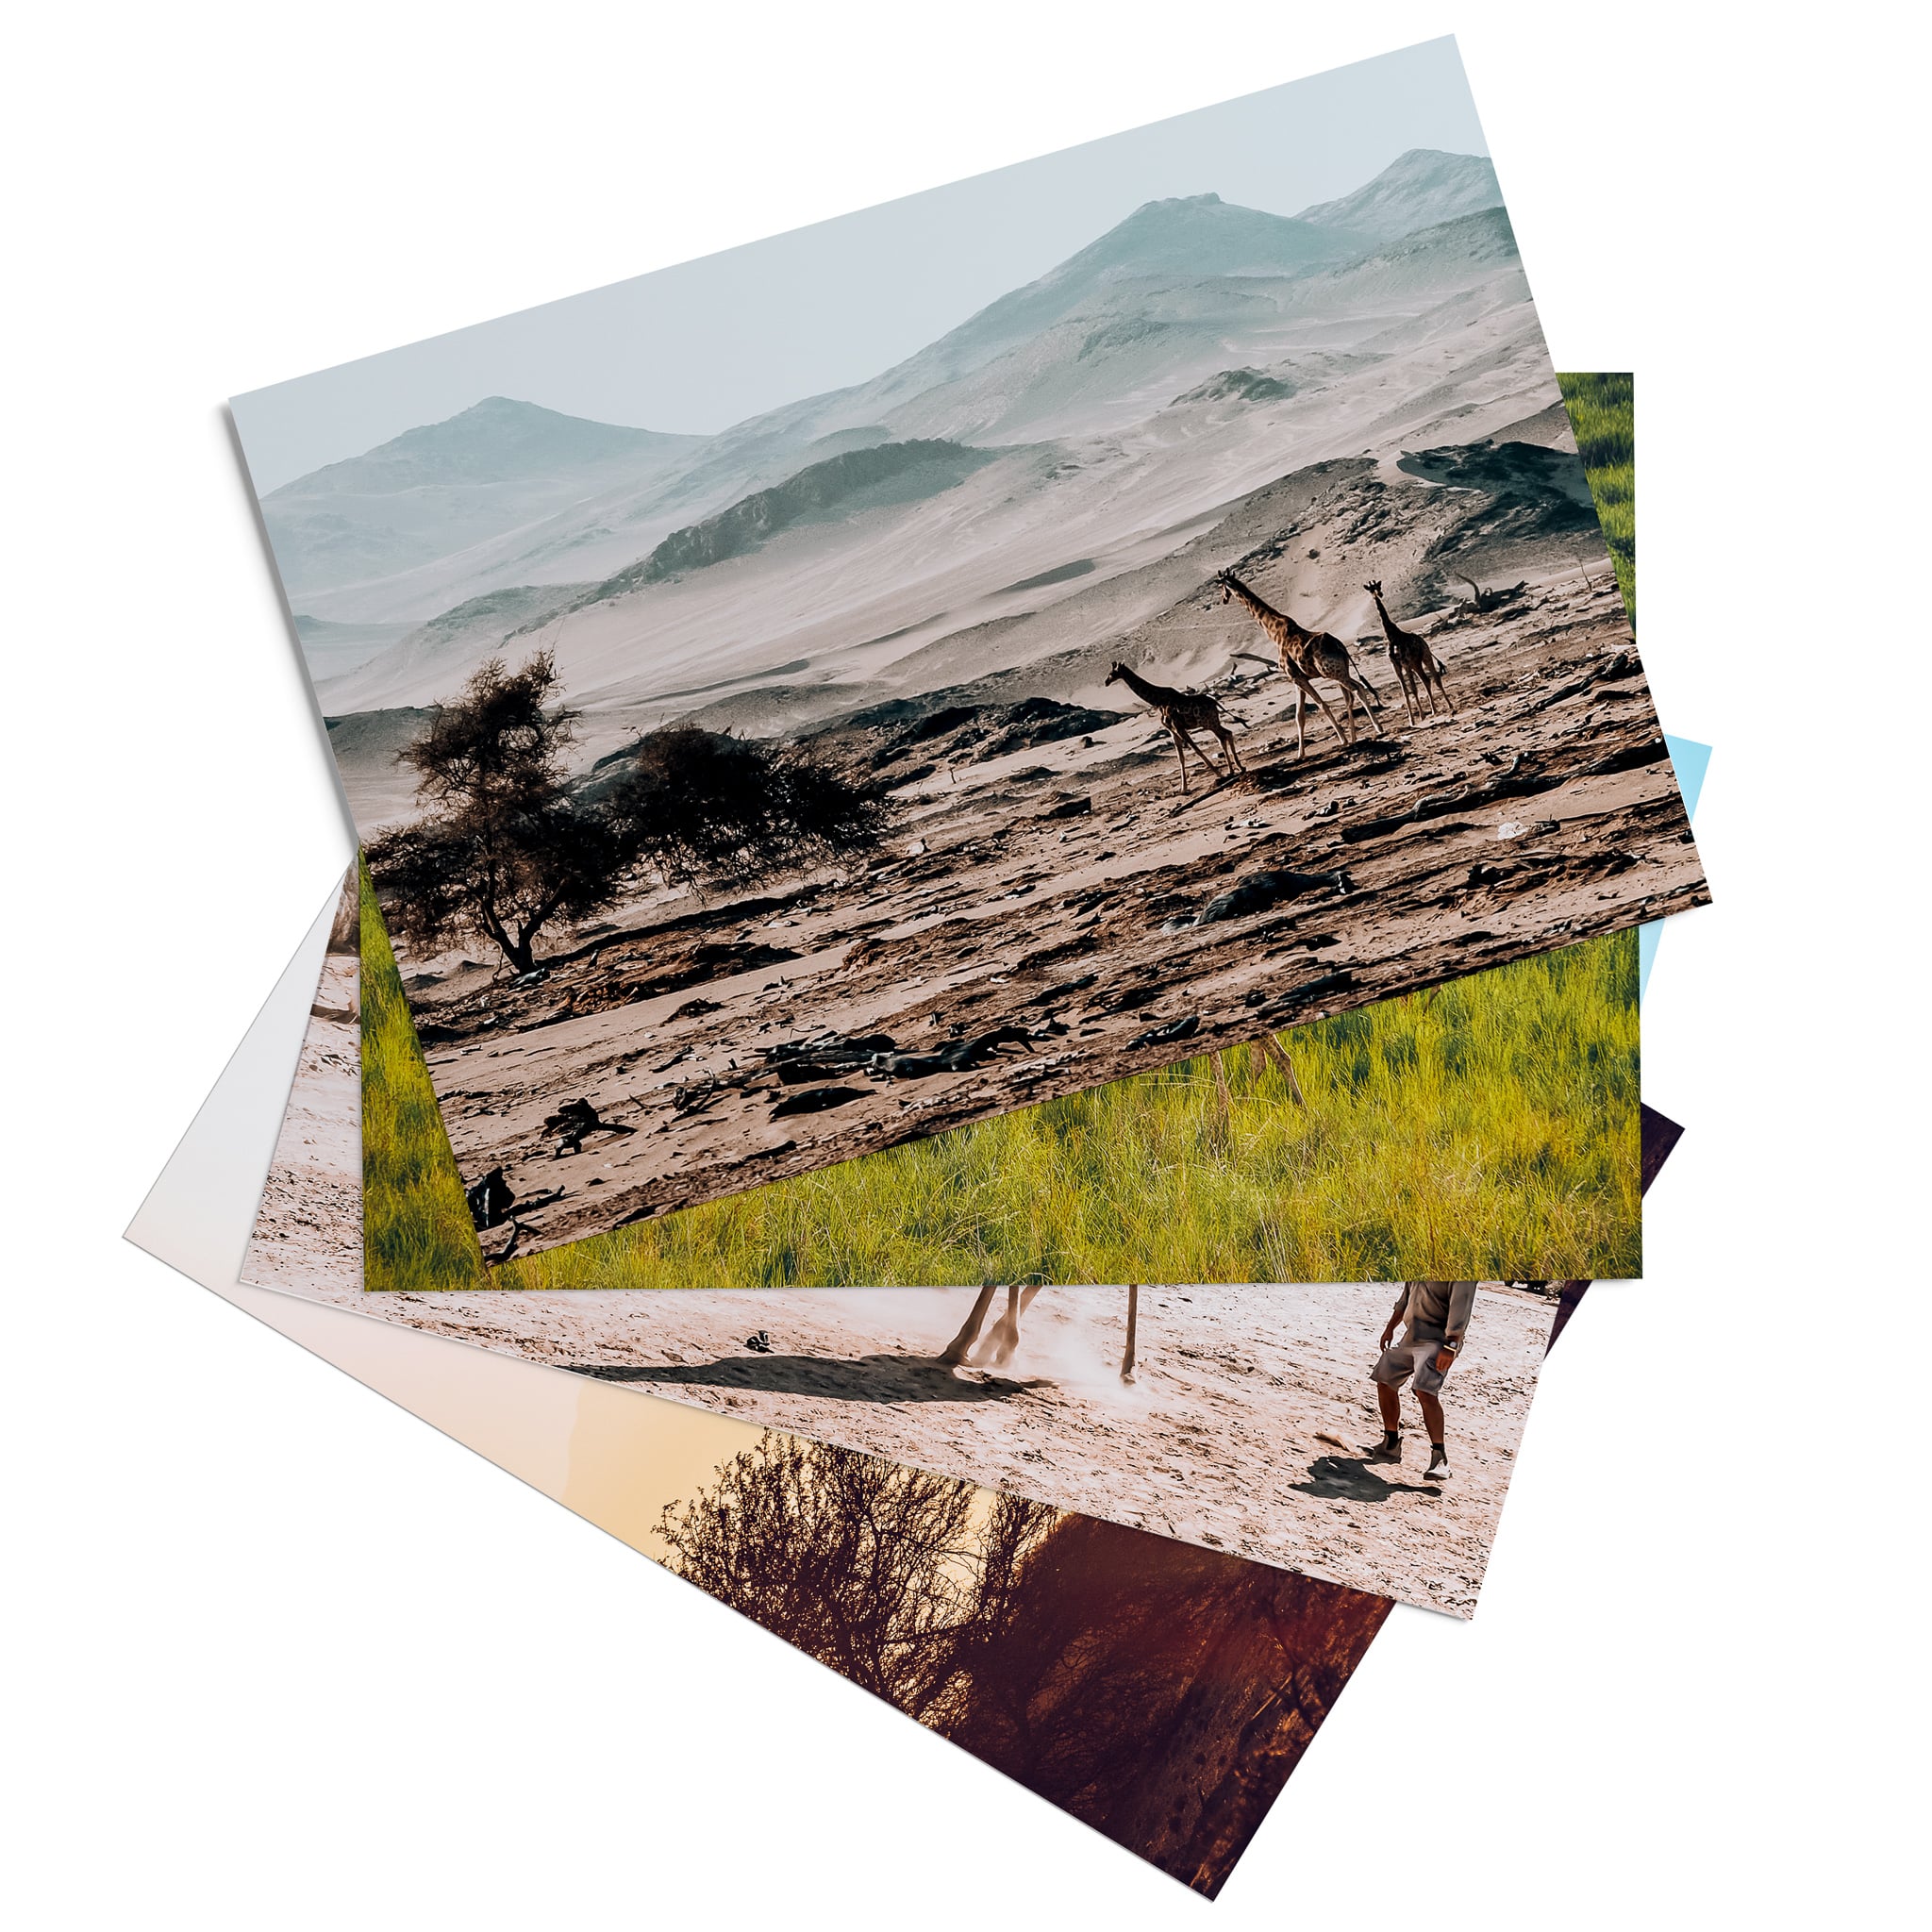 ‘Scenic Giraffe’ assorted postcard set (10 cards)